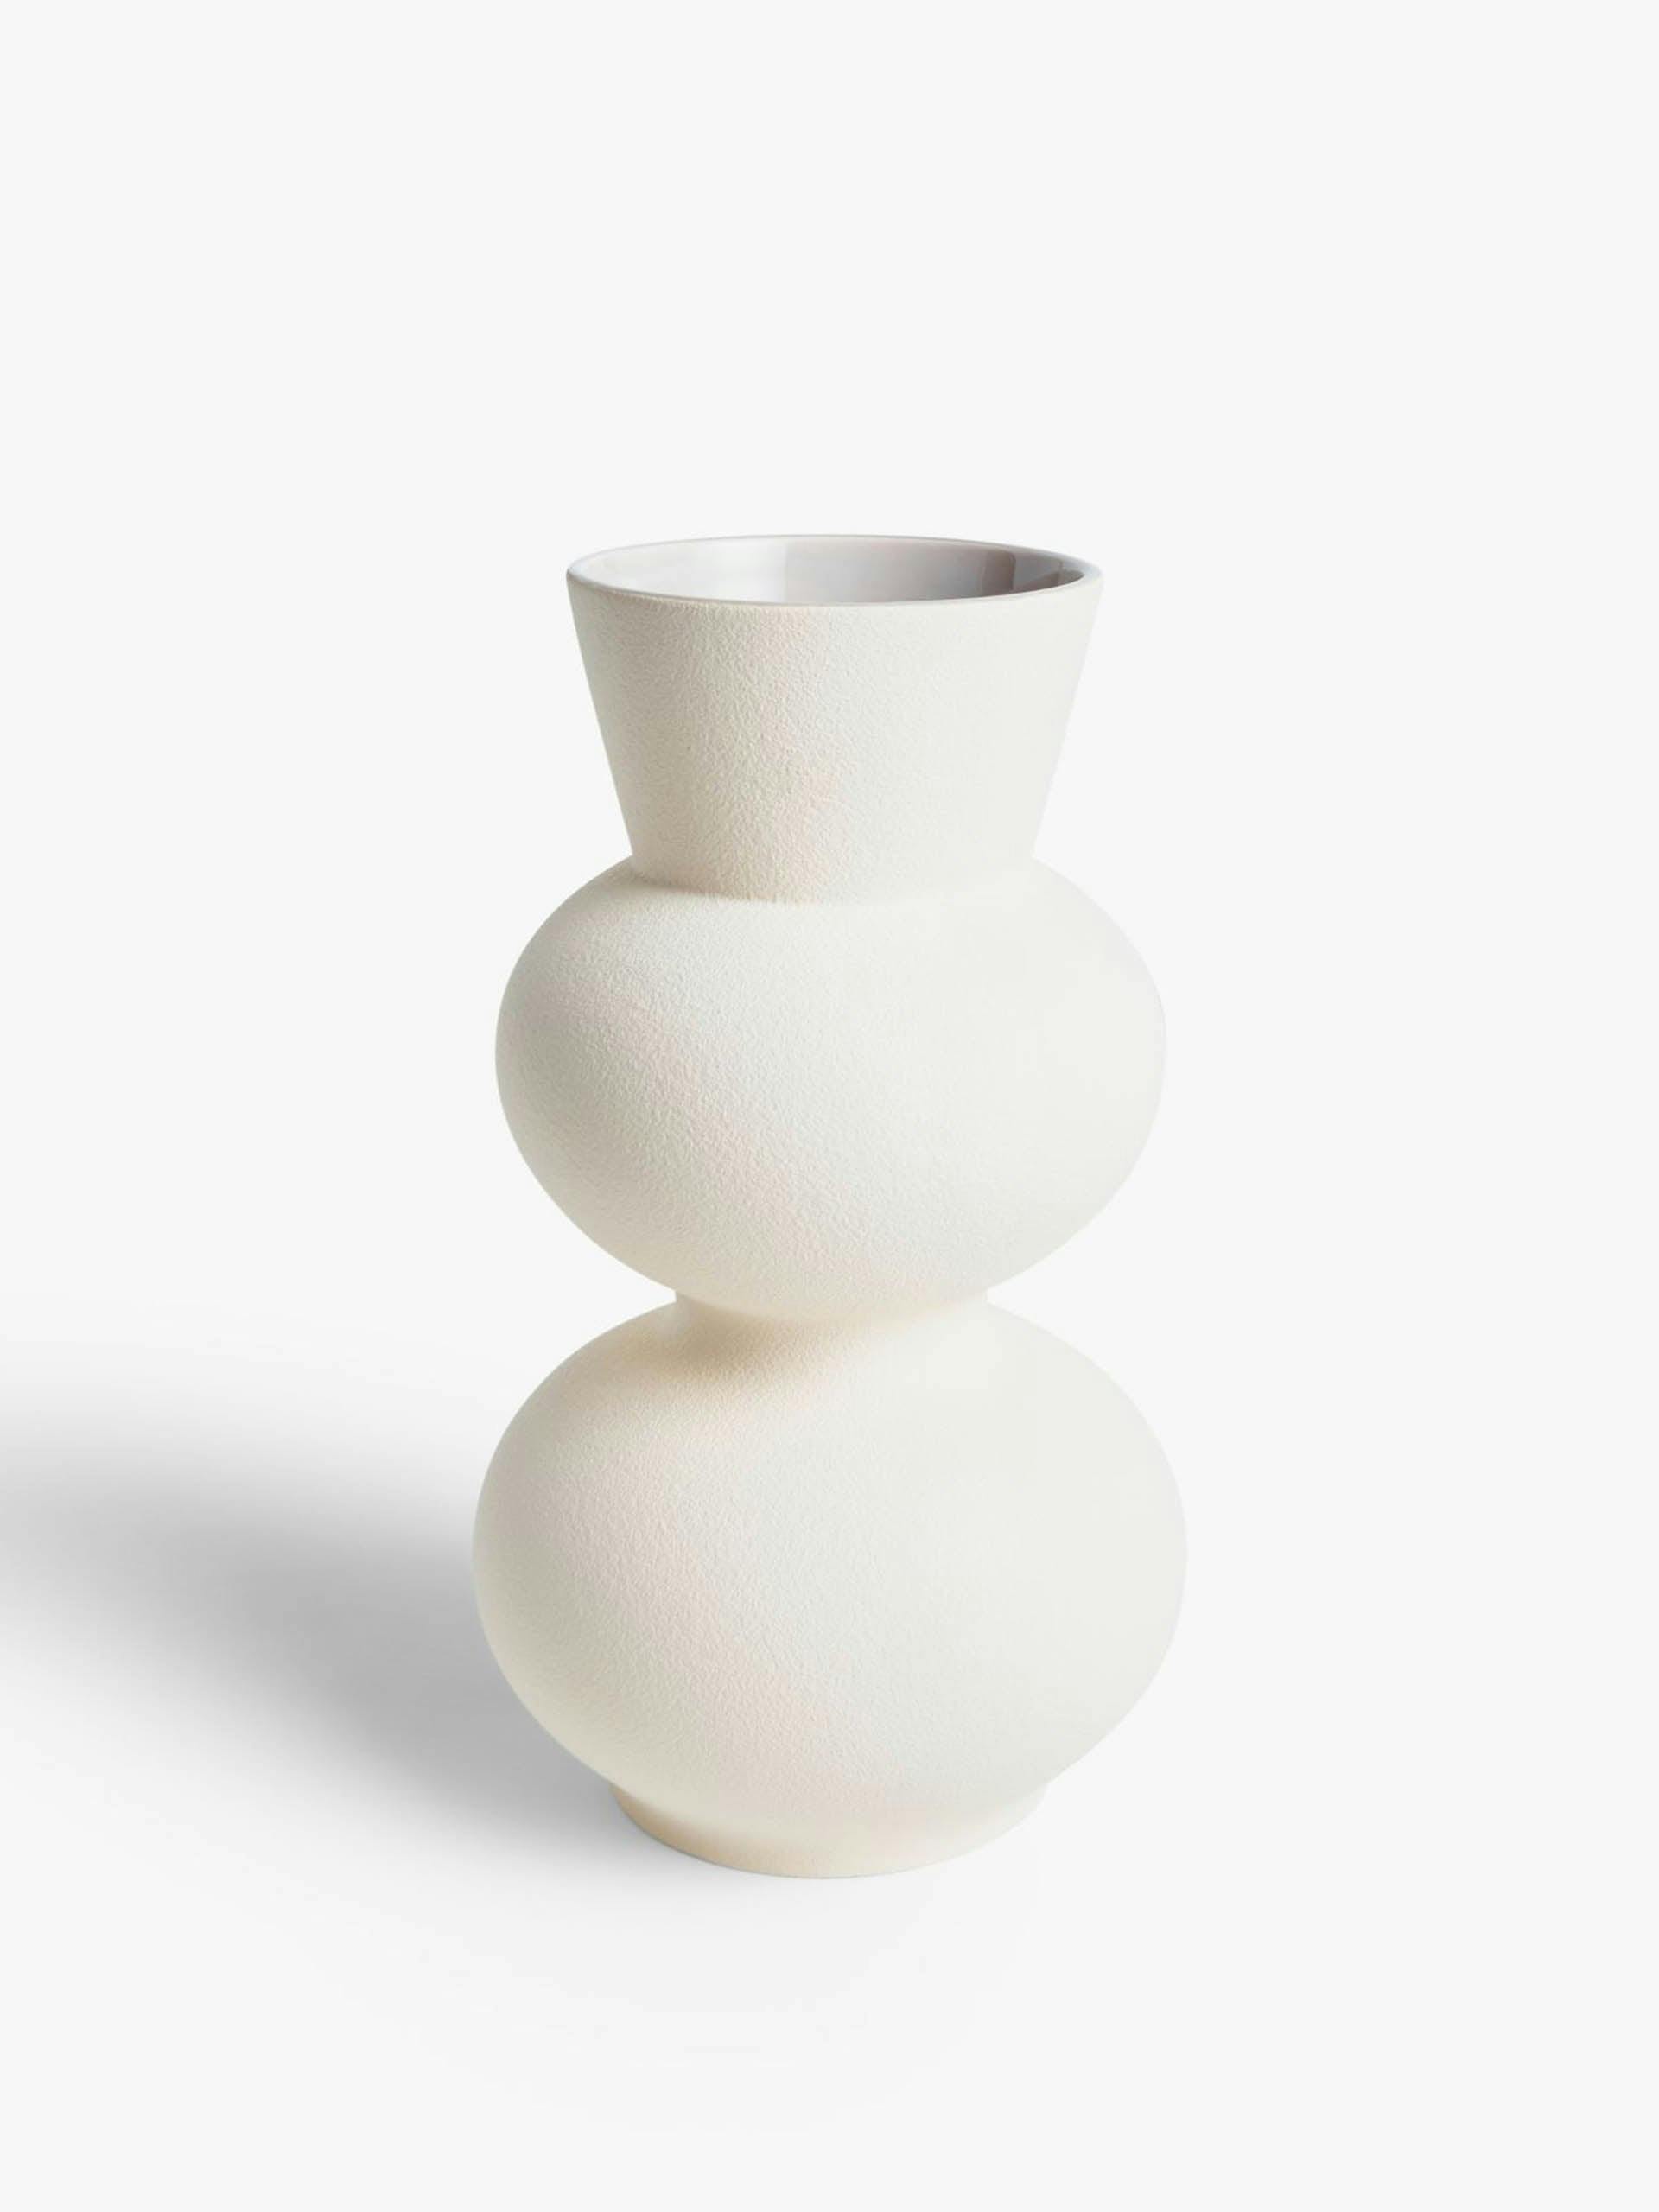 Handmade earthenware Totem vase